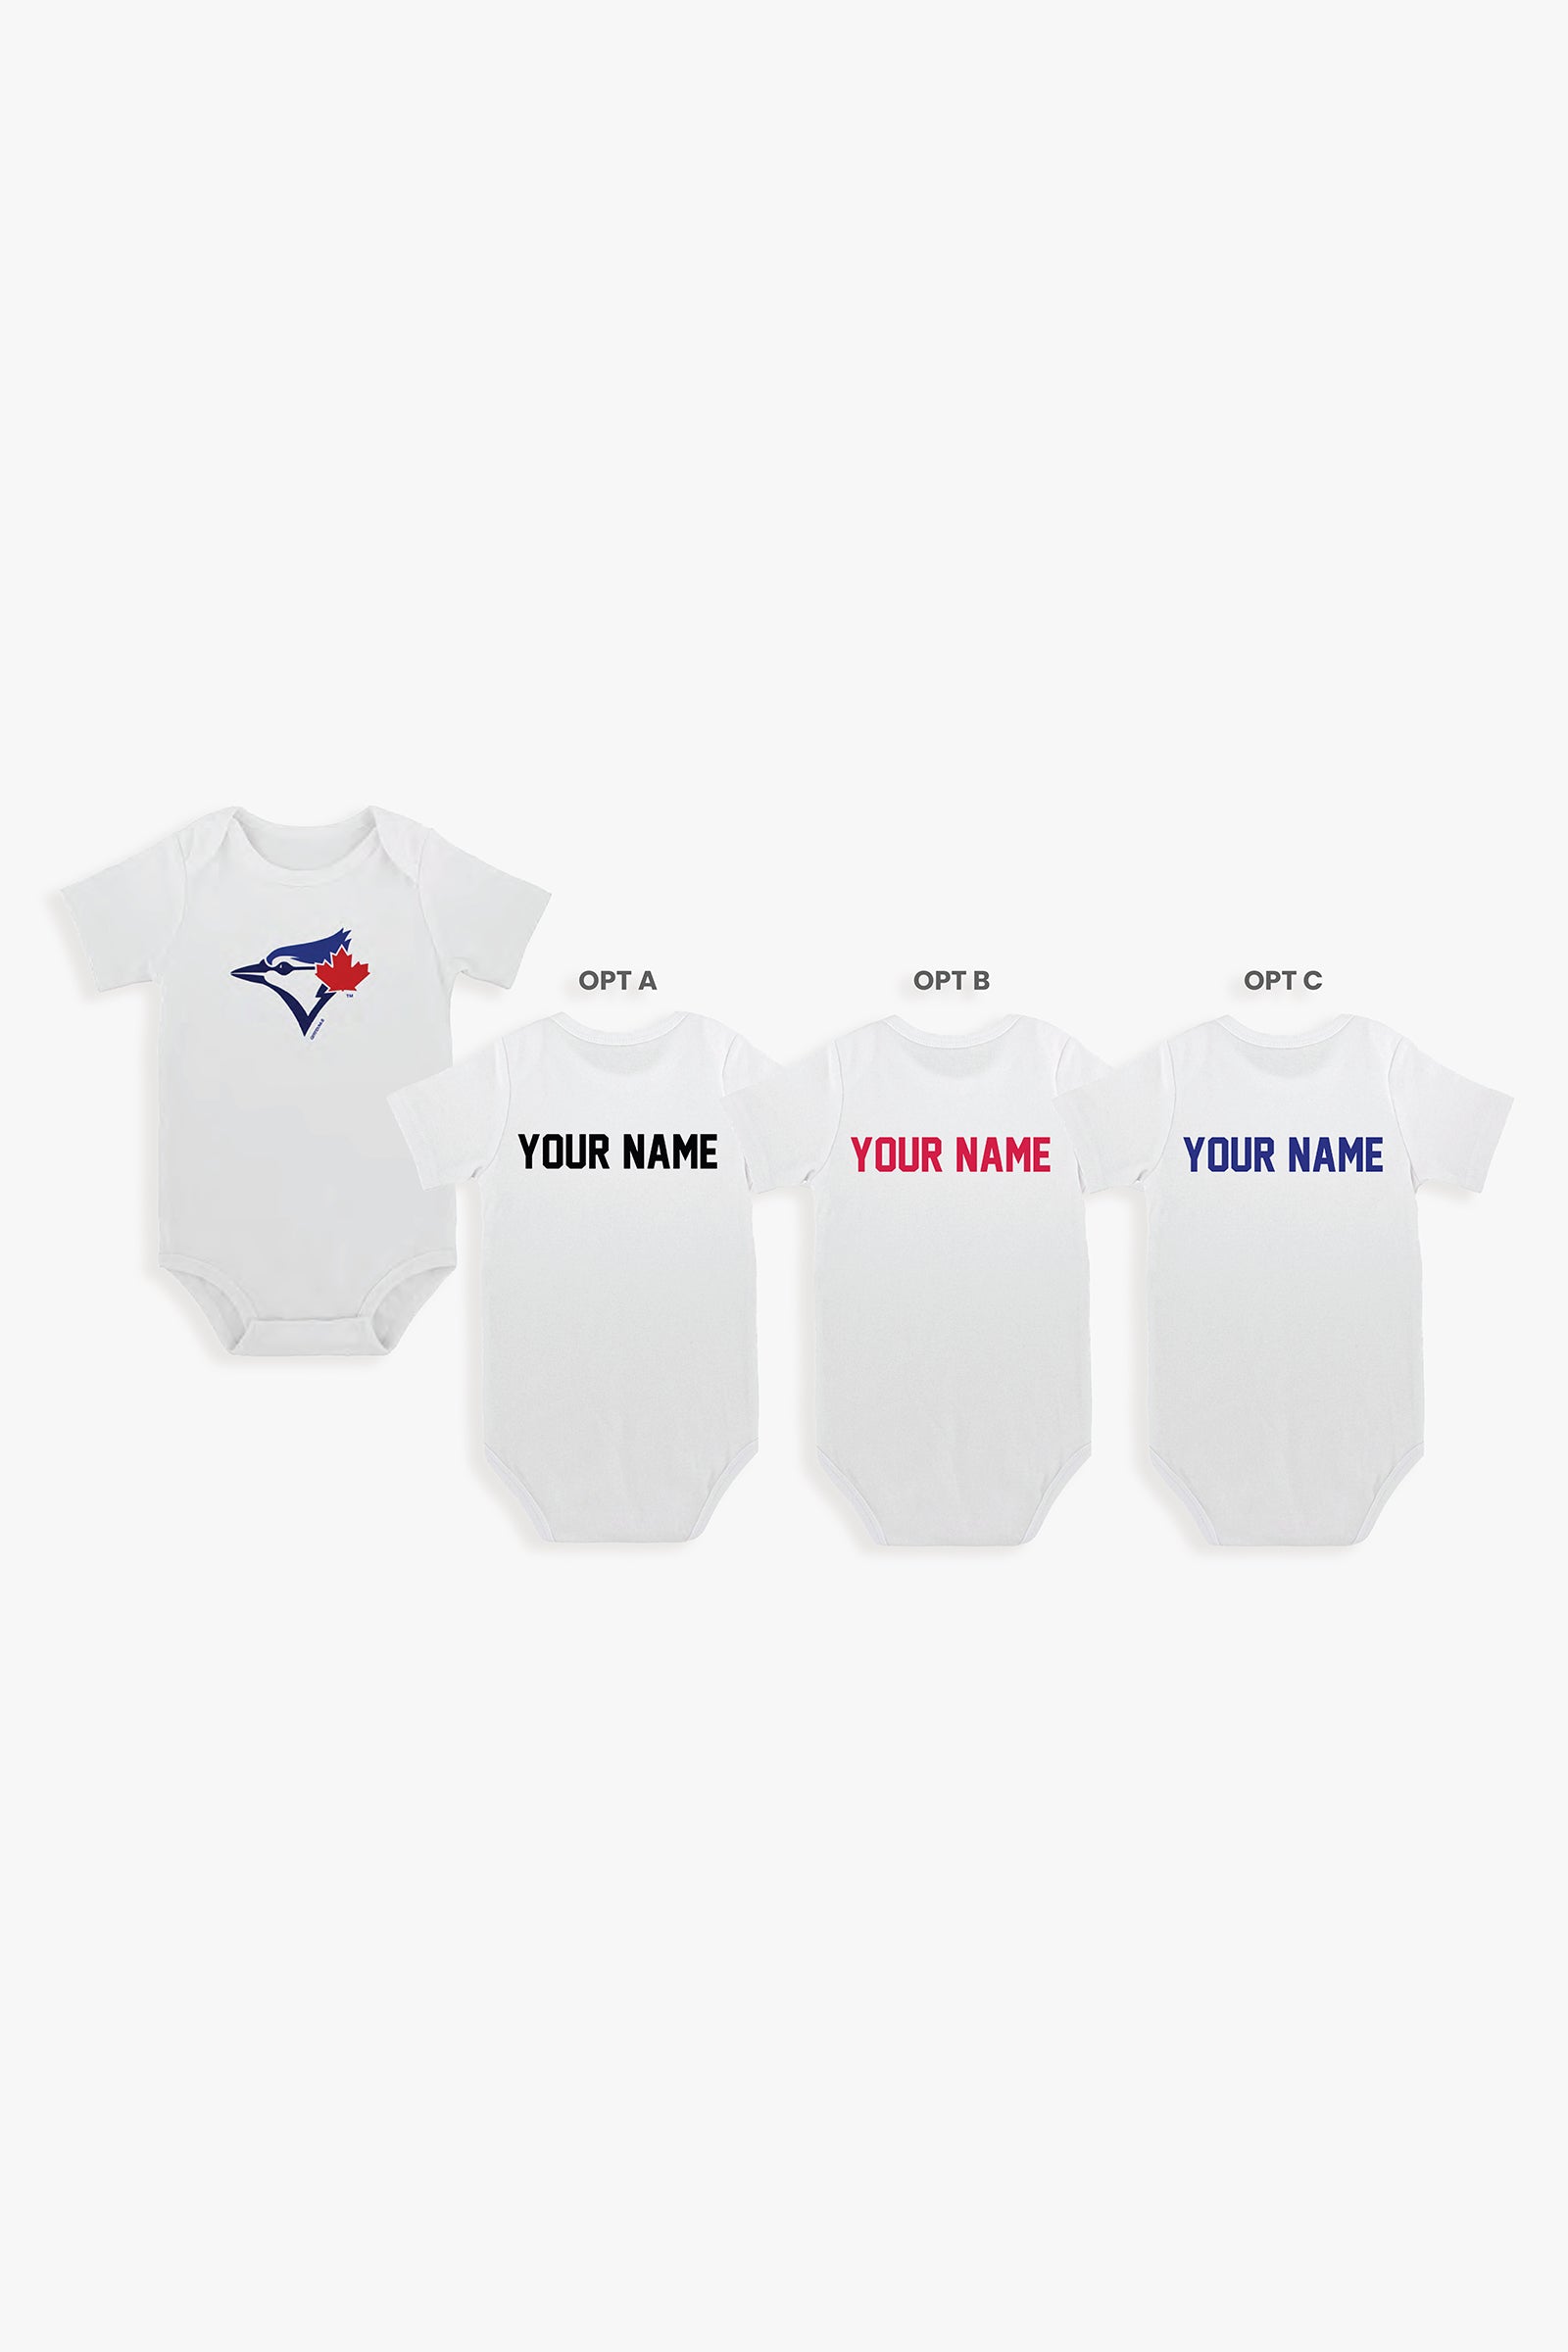 Gertex Customizable MLB Baby Bodysuit in White (12-18 Months)